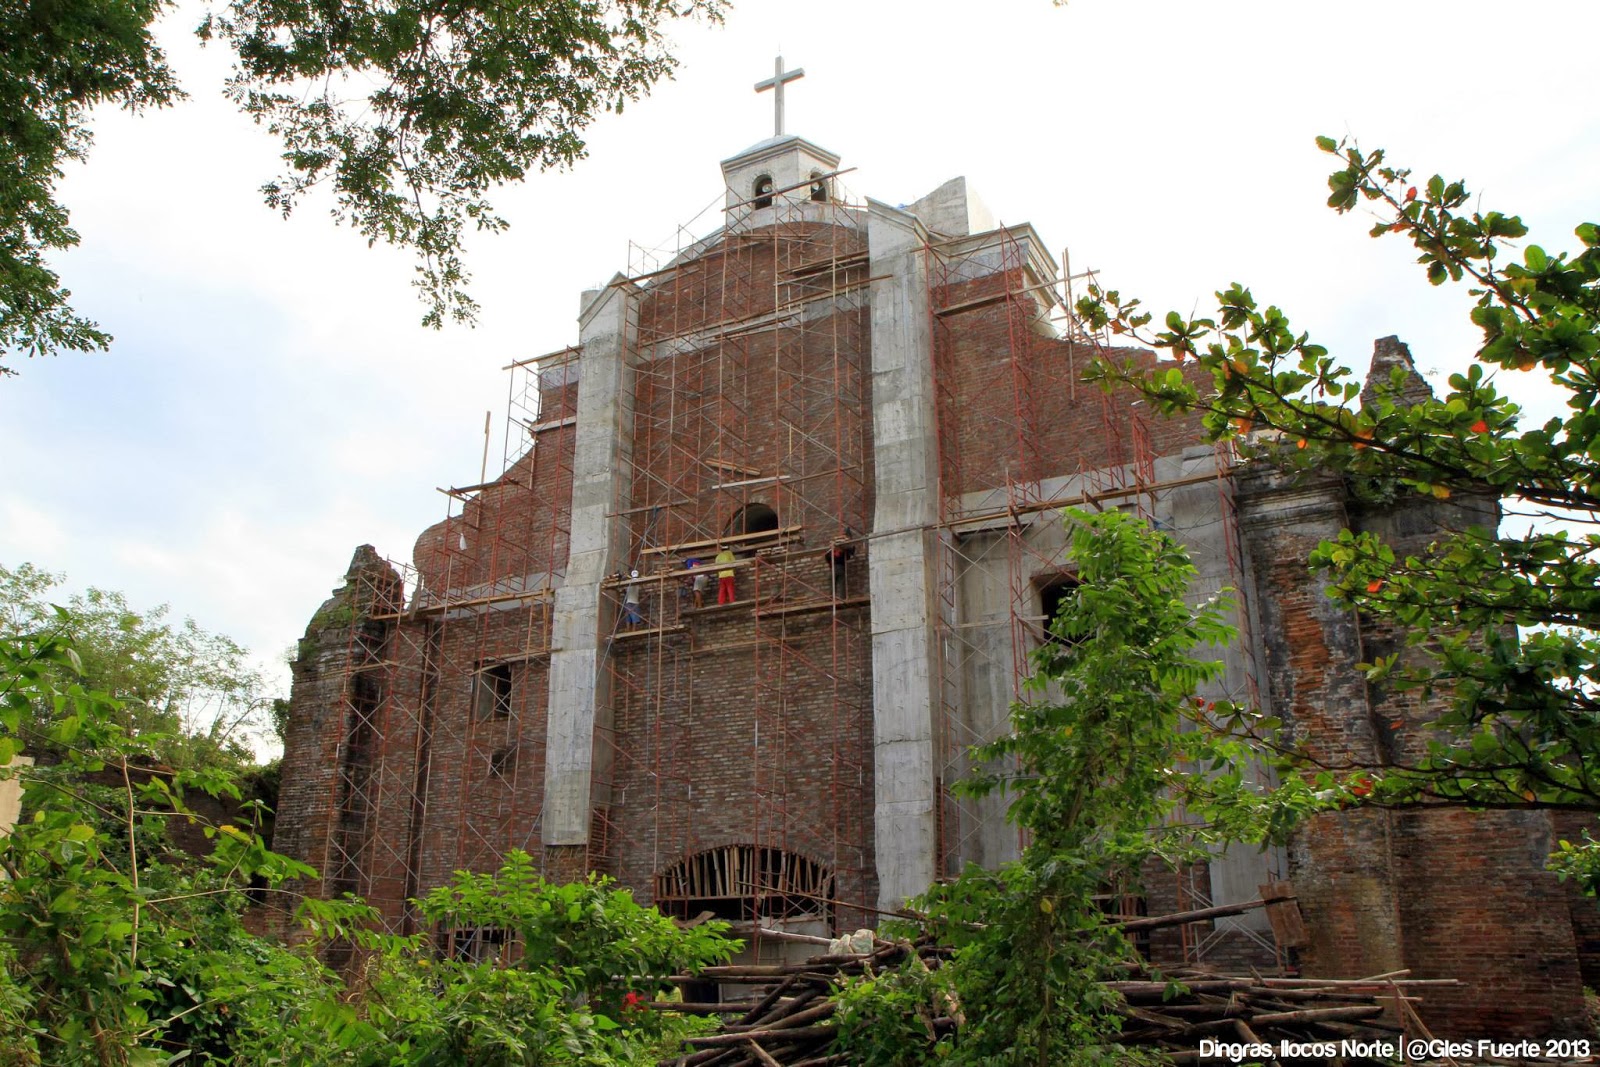 Explore.Dream.Discover: Exploring the Church of Dingras, Ilocos Norte